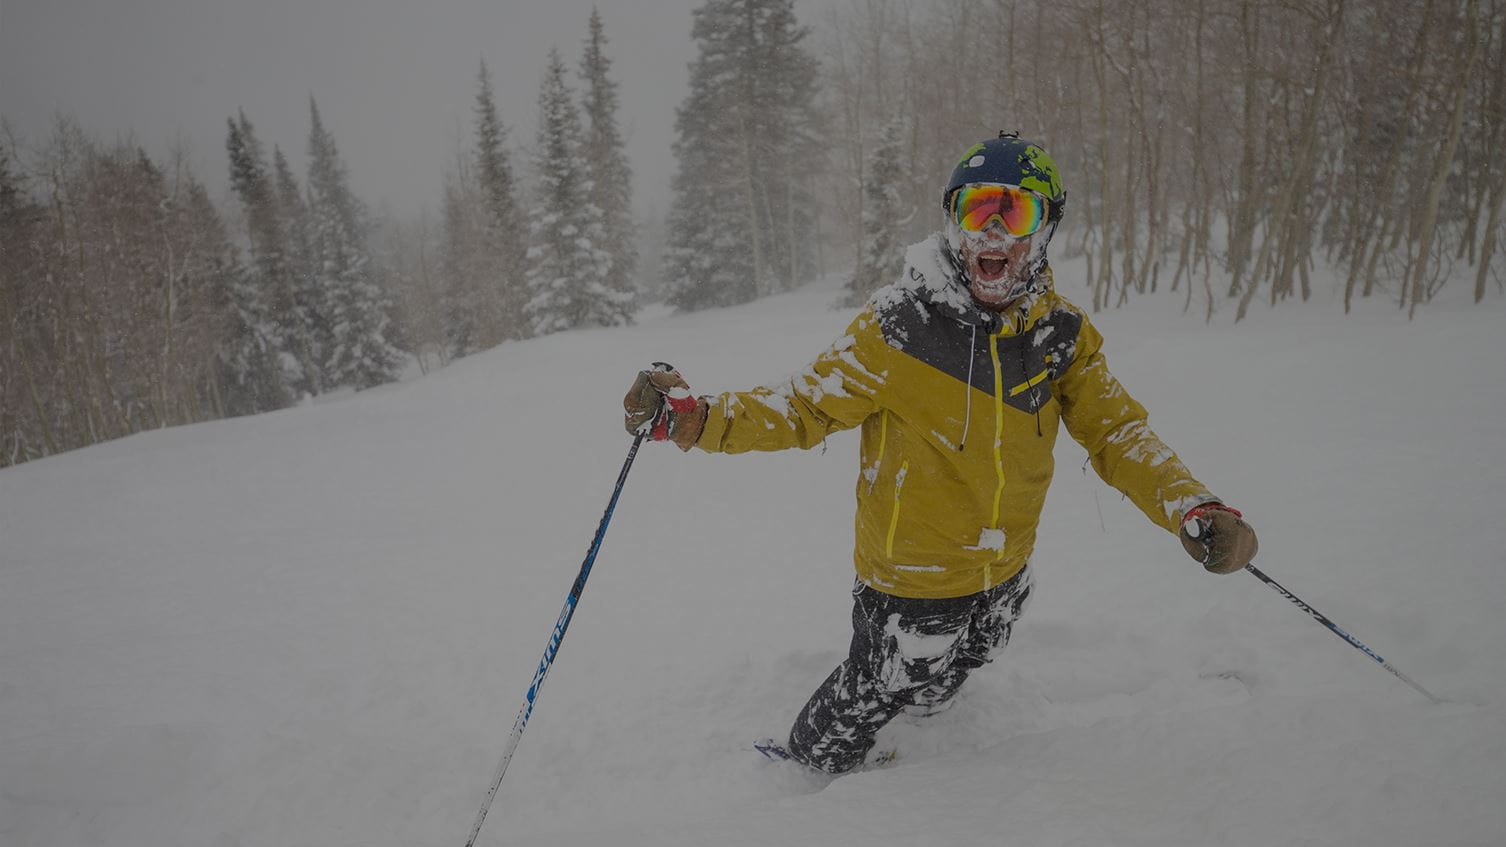 Skiier on a powder day at Aspen Snowmass, Colorado